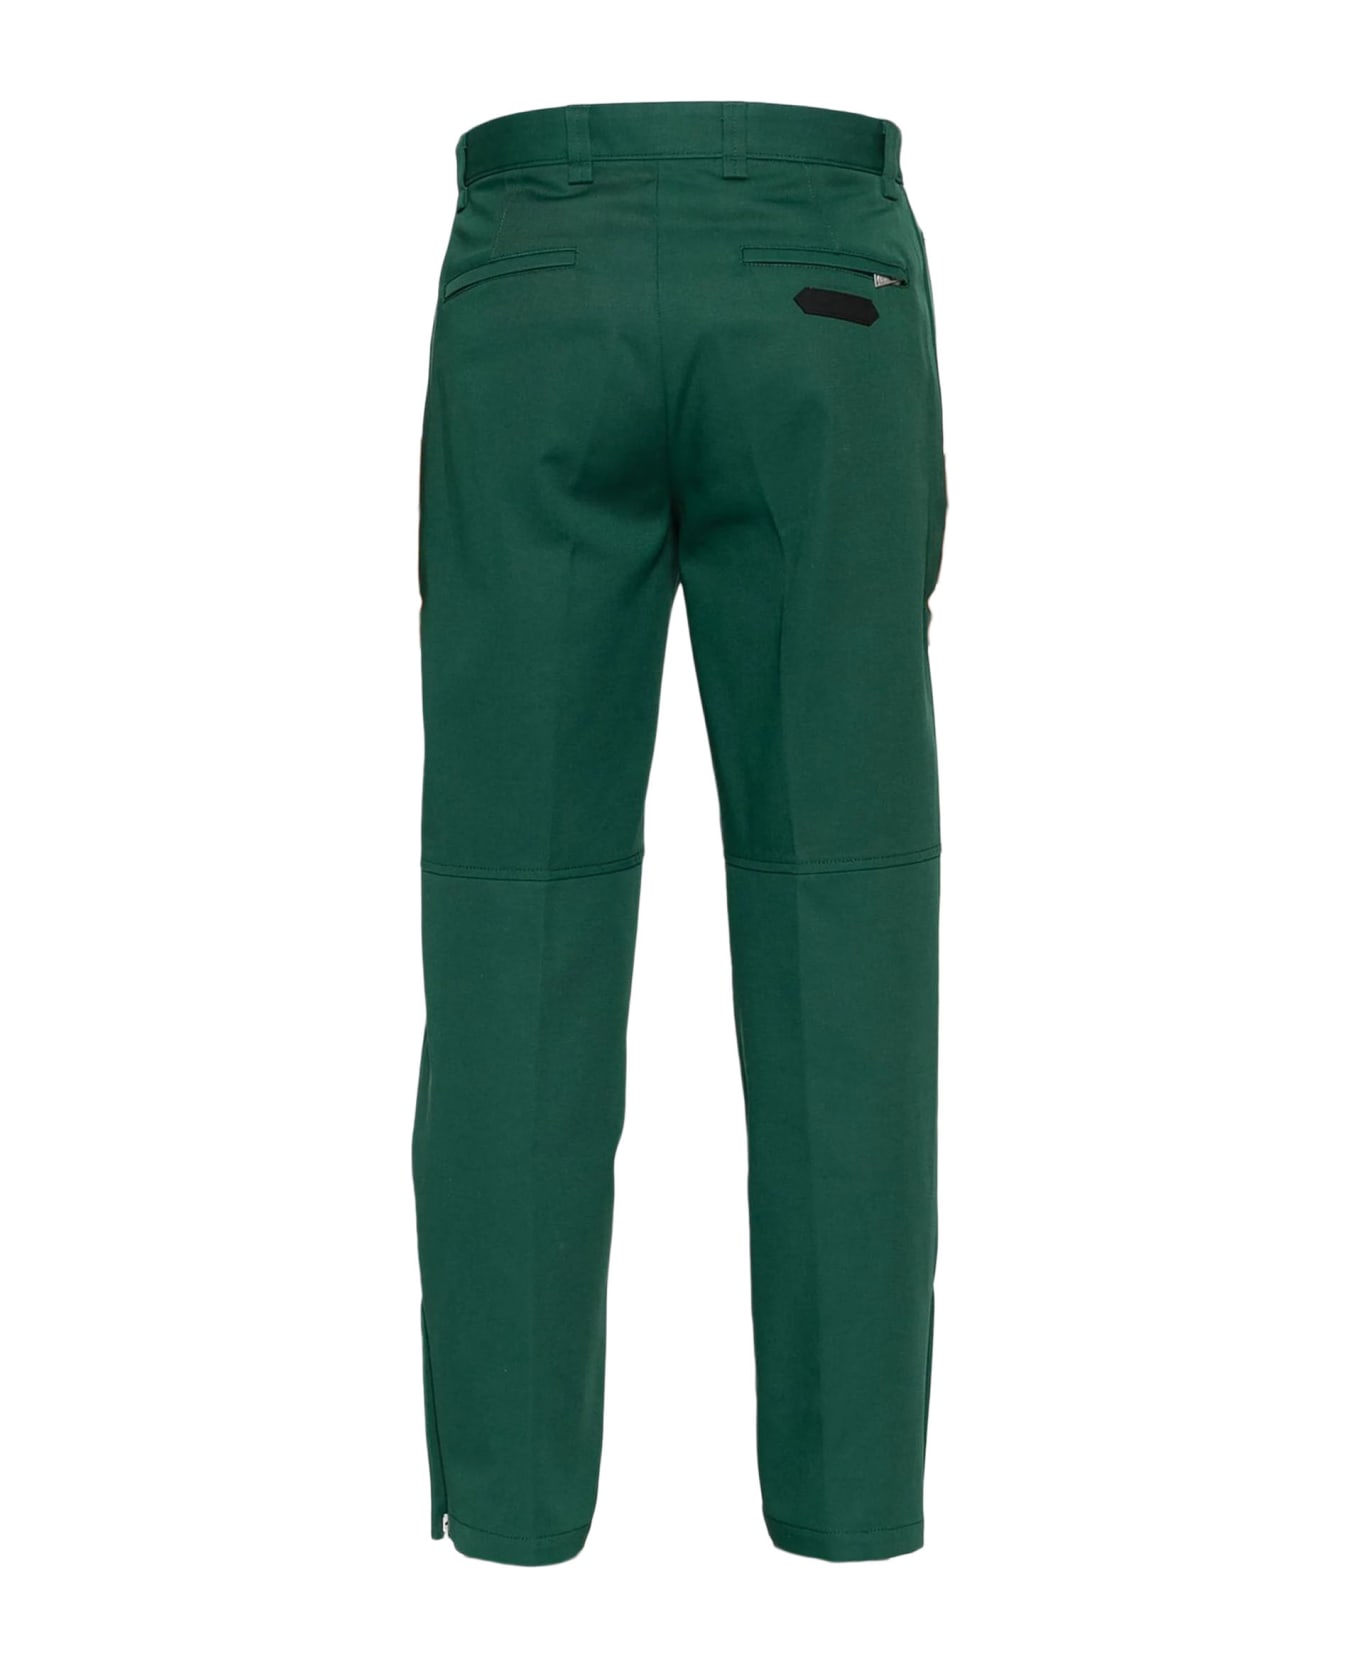 Lanvin Trousers Green - Green